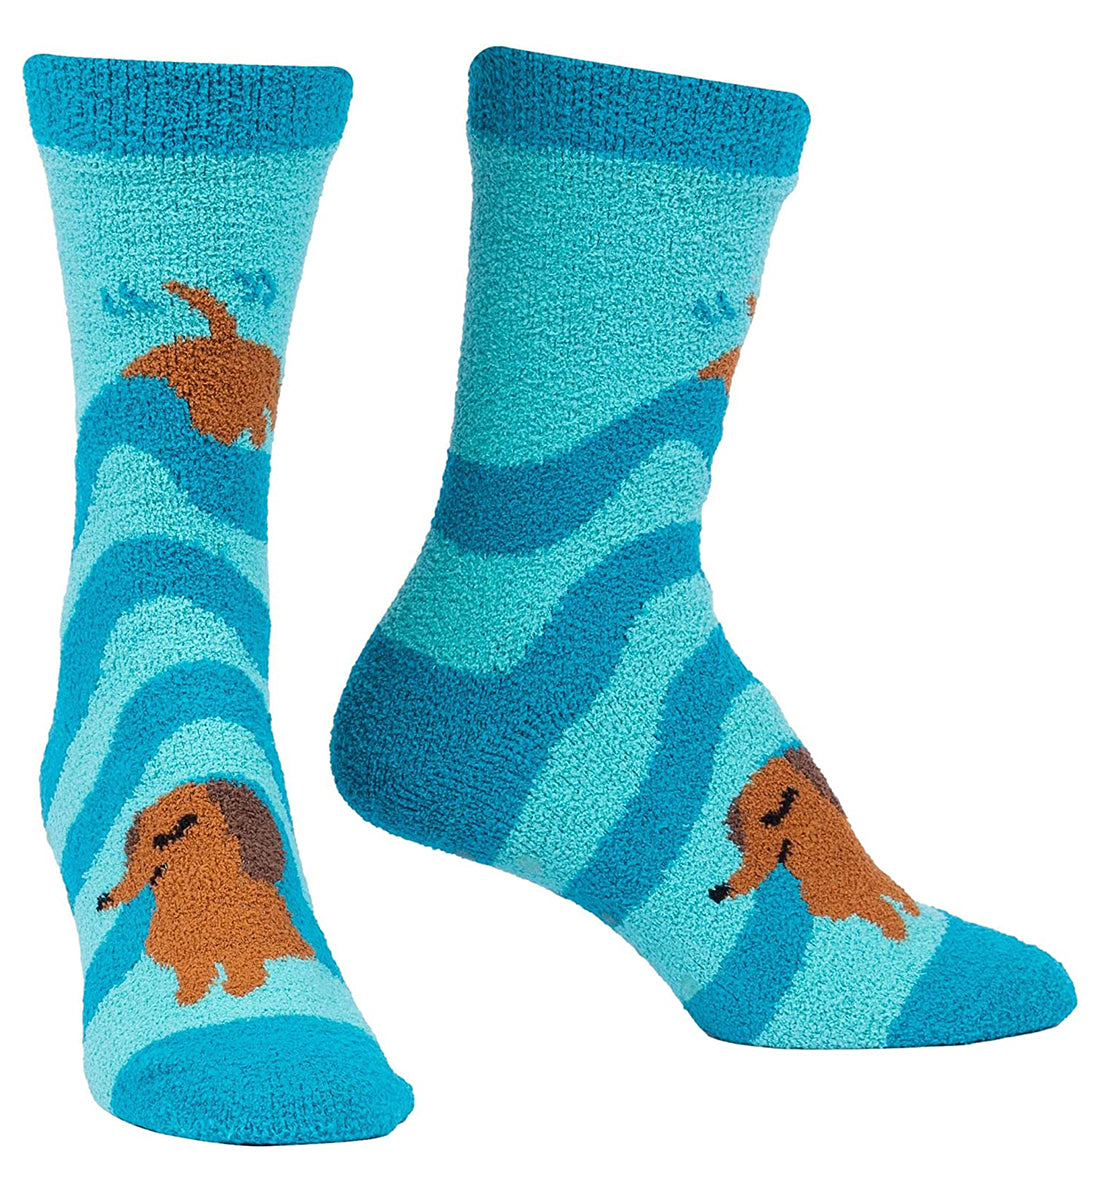 SOCK it to me Slipper Socks (CZ0008),Not Every Dog Can Be a Weiner - Not Every Dog Can Be a Weiner,One Size